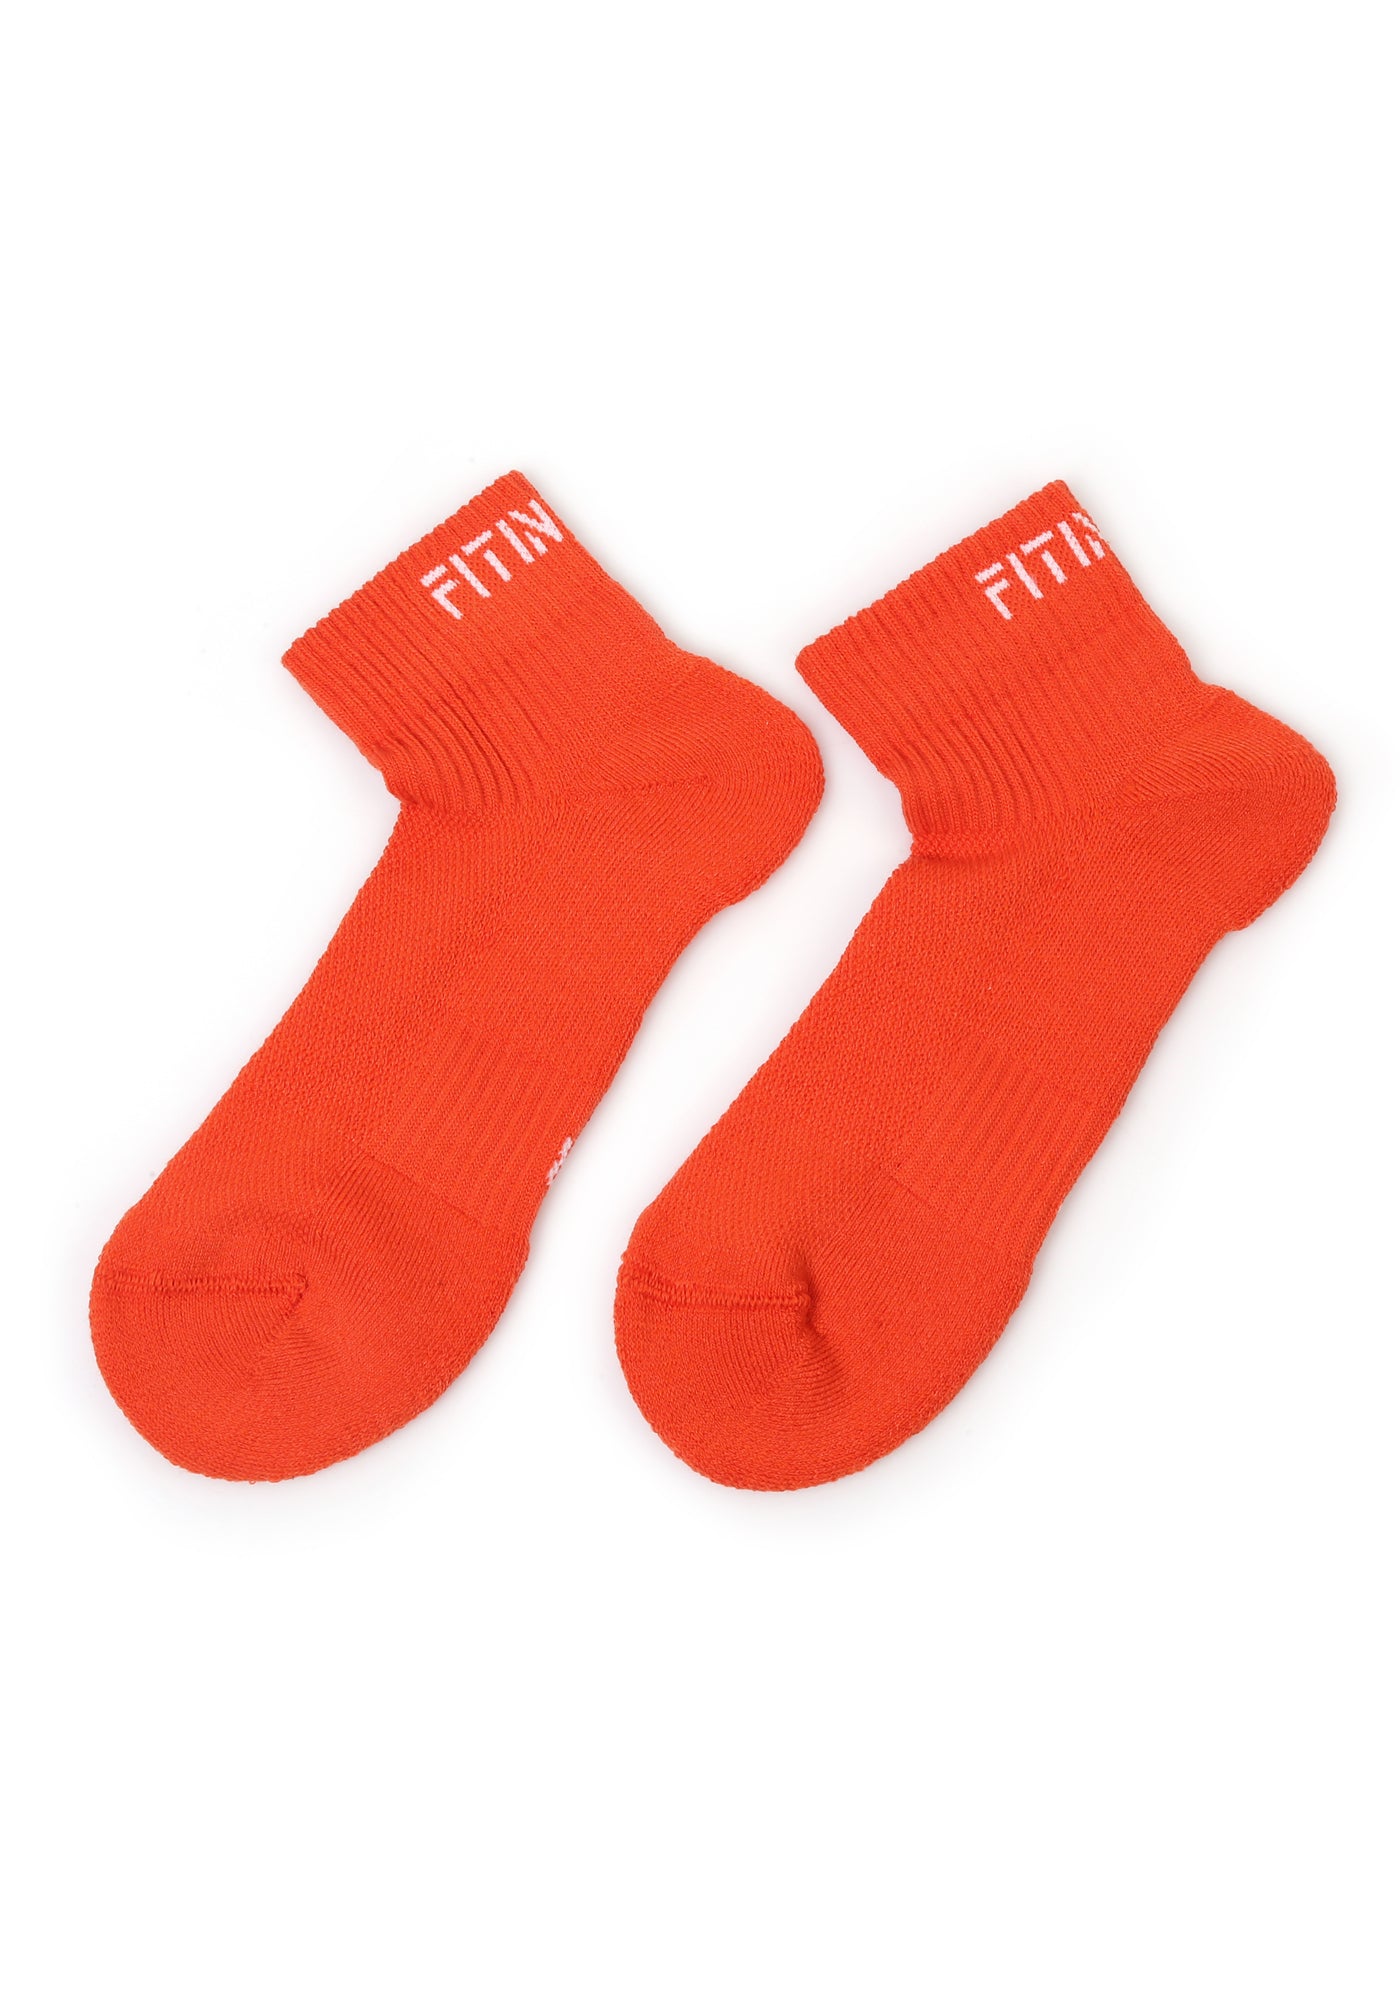 Premium Performance Quarter Trainer Sports Socks 3pk (Blue-Pink-Orange)